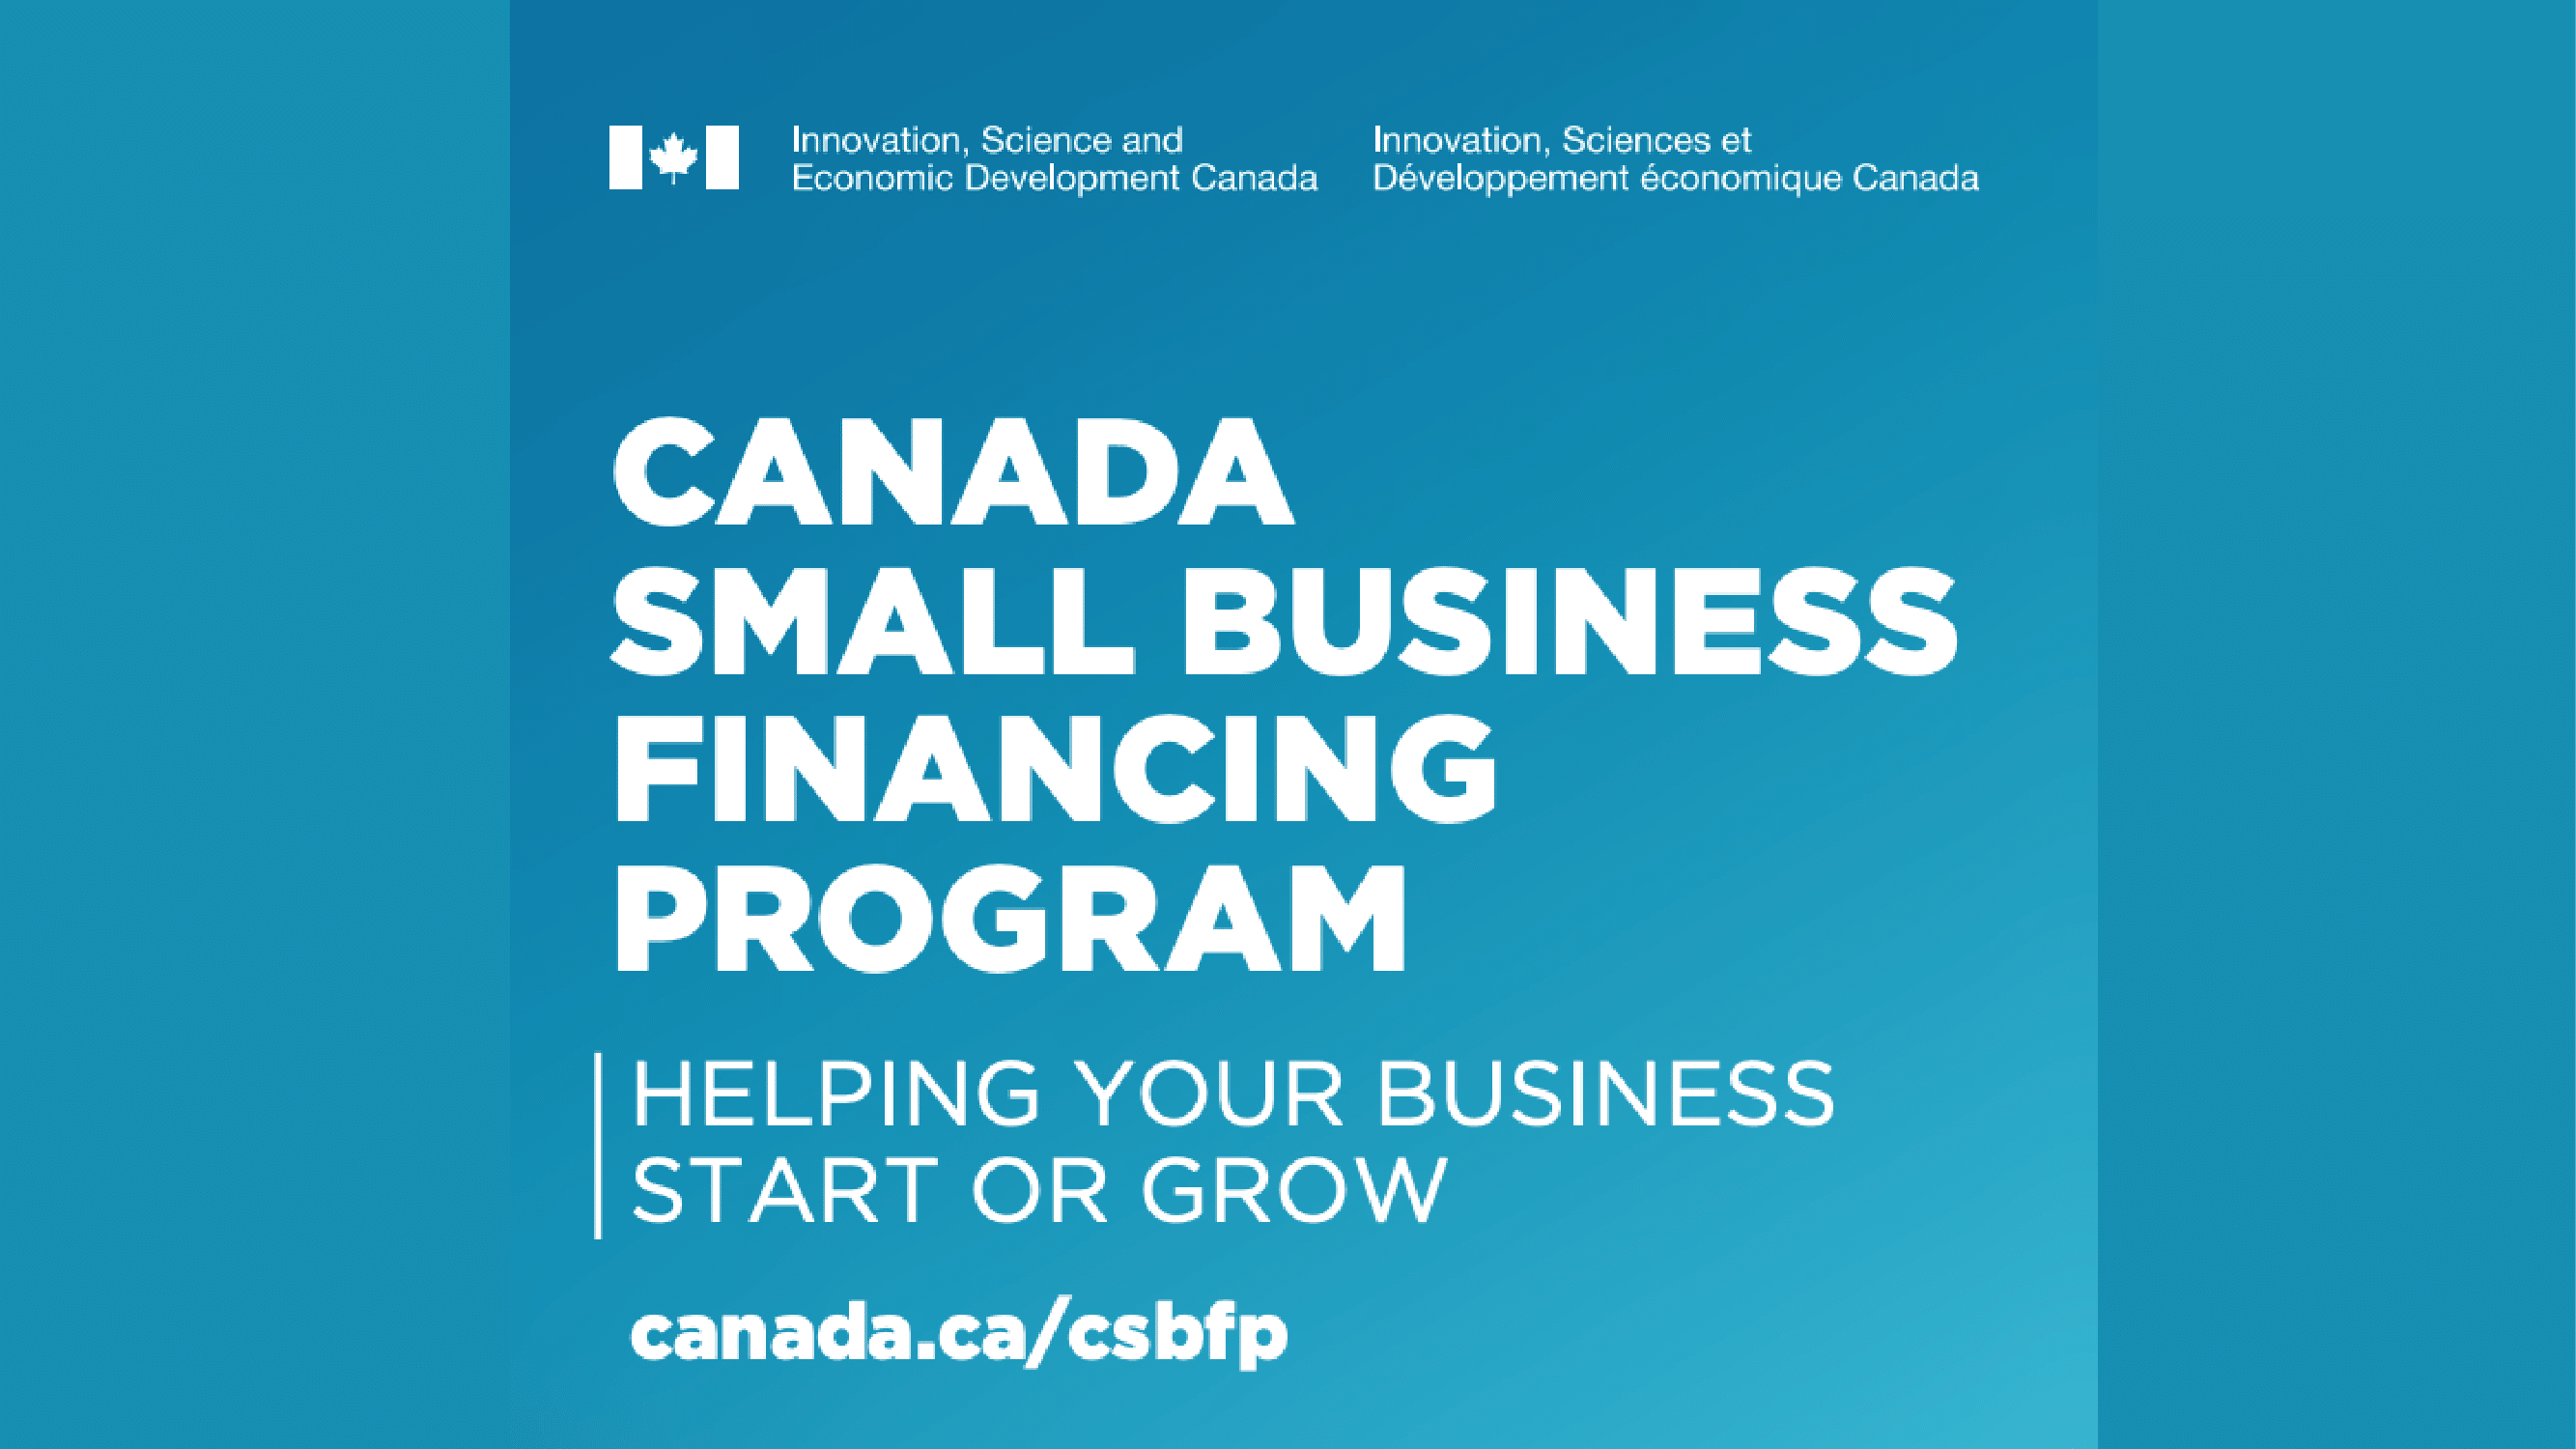 Canada Small Business Financing Program